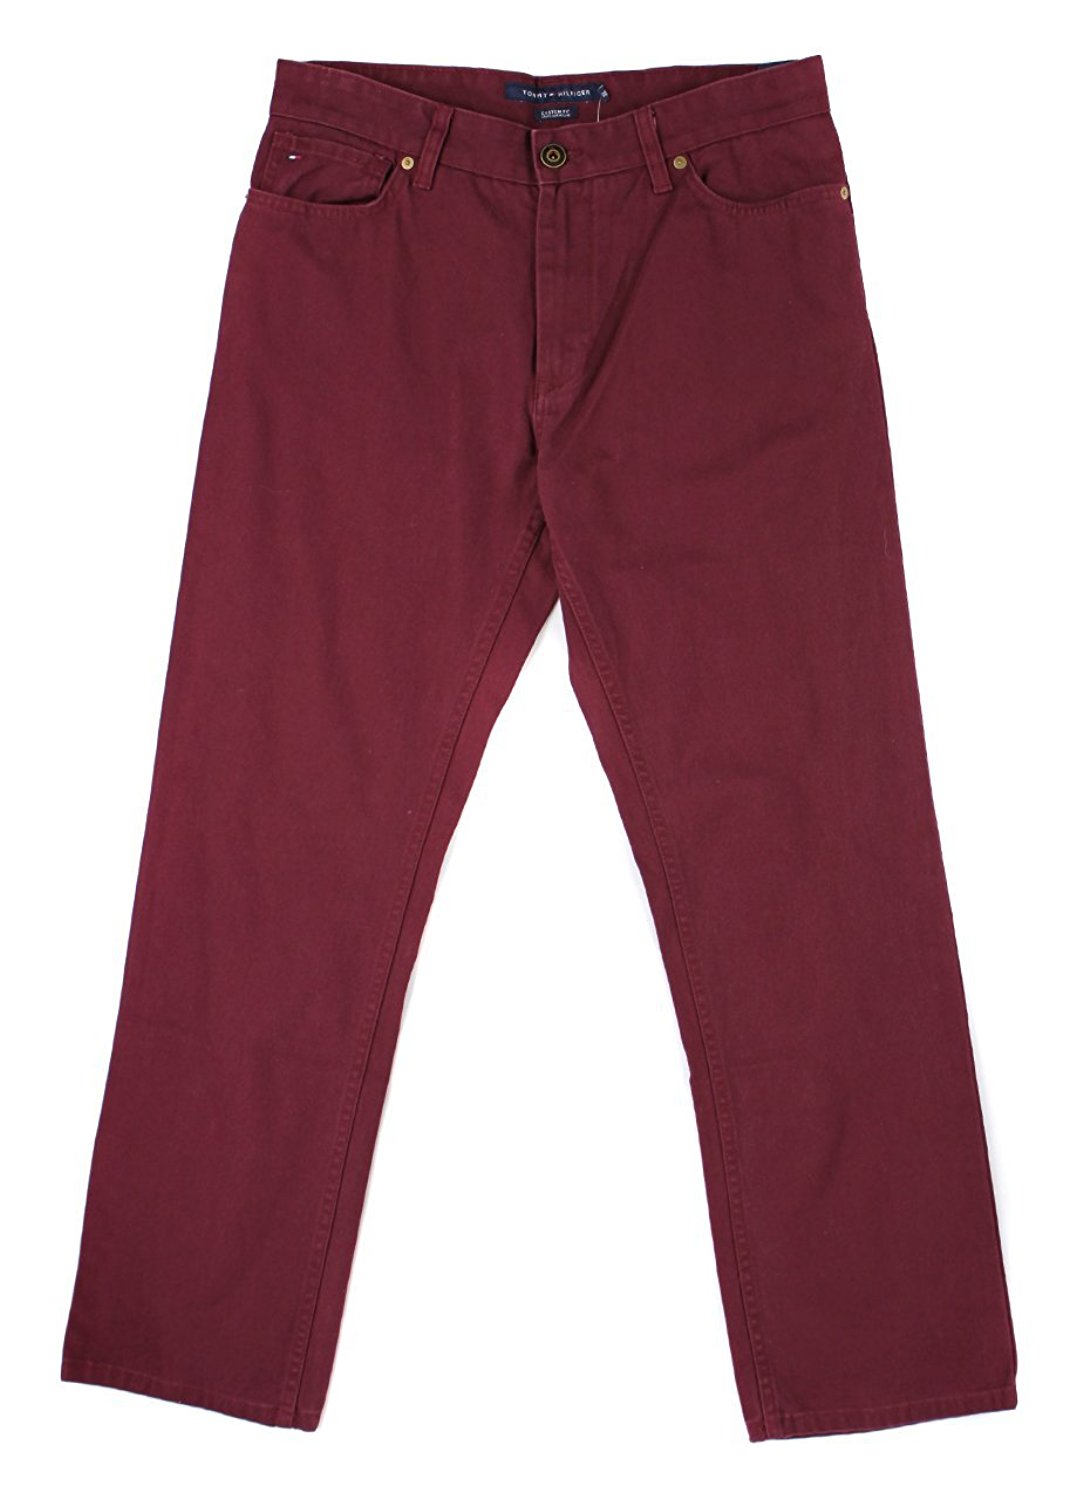 5907-2 Tommy Hilfiger Luke Five-pocket Pants Puddle Grey 36 x 32 $69 ...